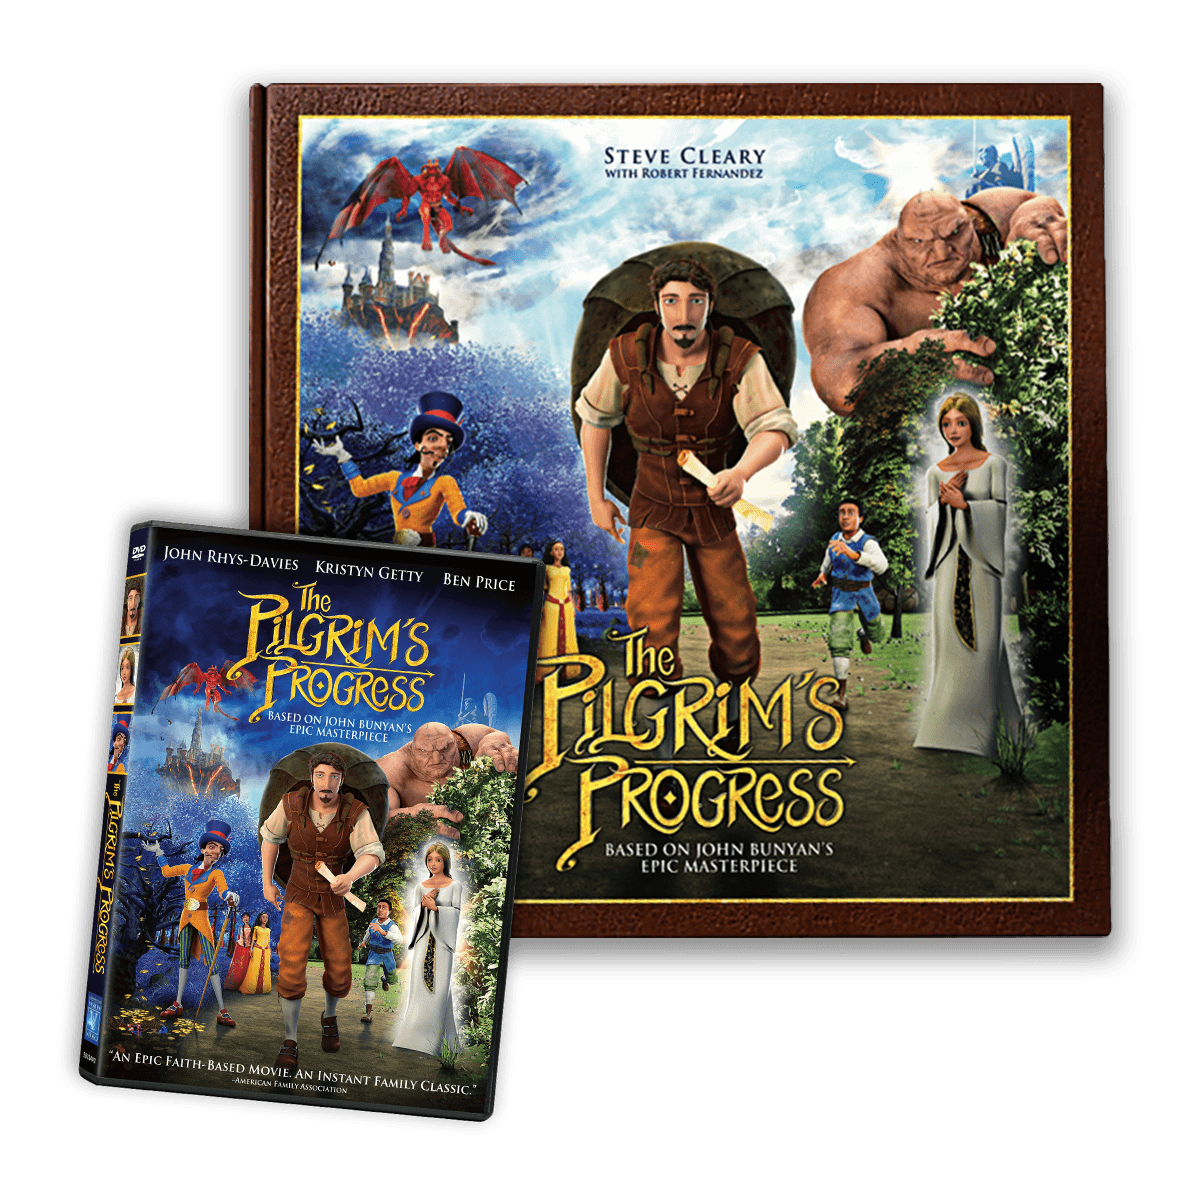 Pilgrim's Progress Illustrated Storybook cover & DVD cover